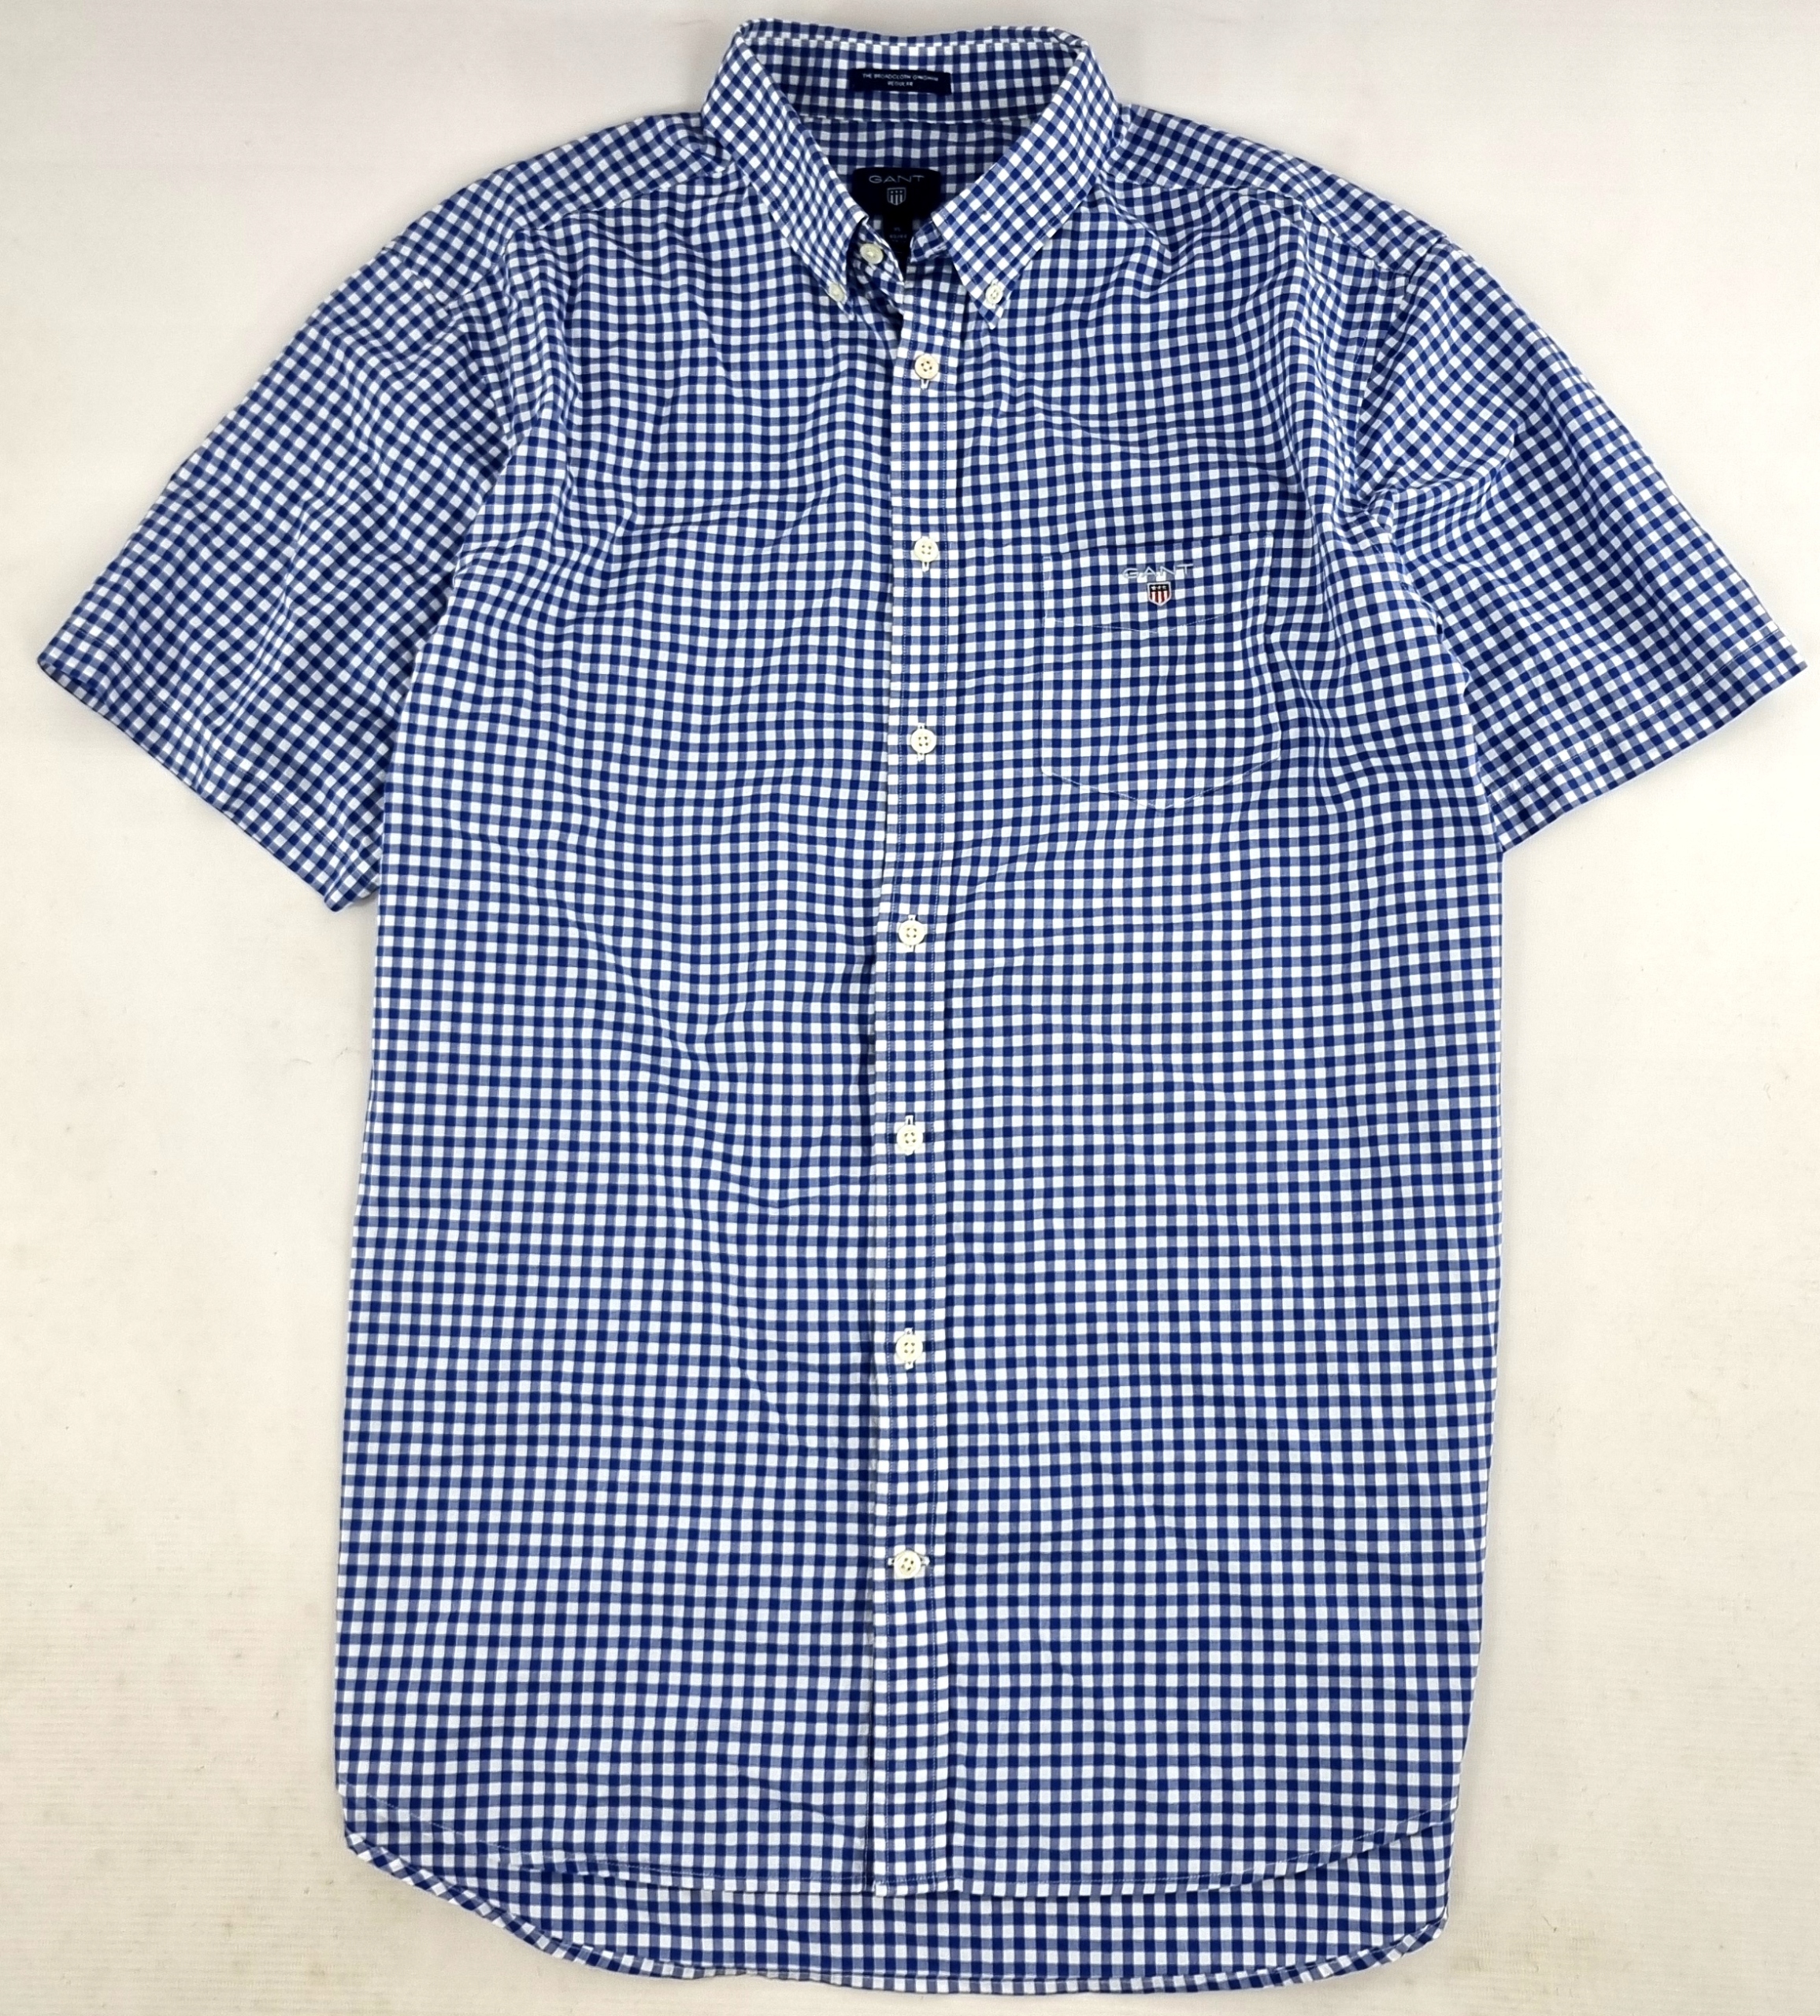 Gant Niebieska rozpinana Koszula Koszulka XL